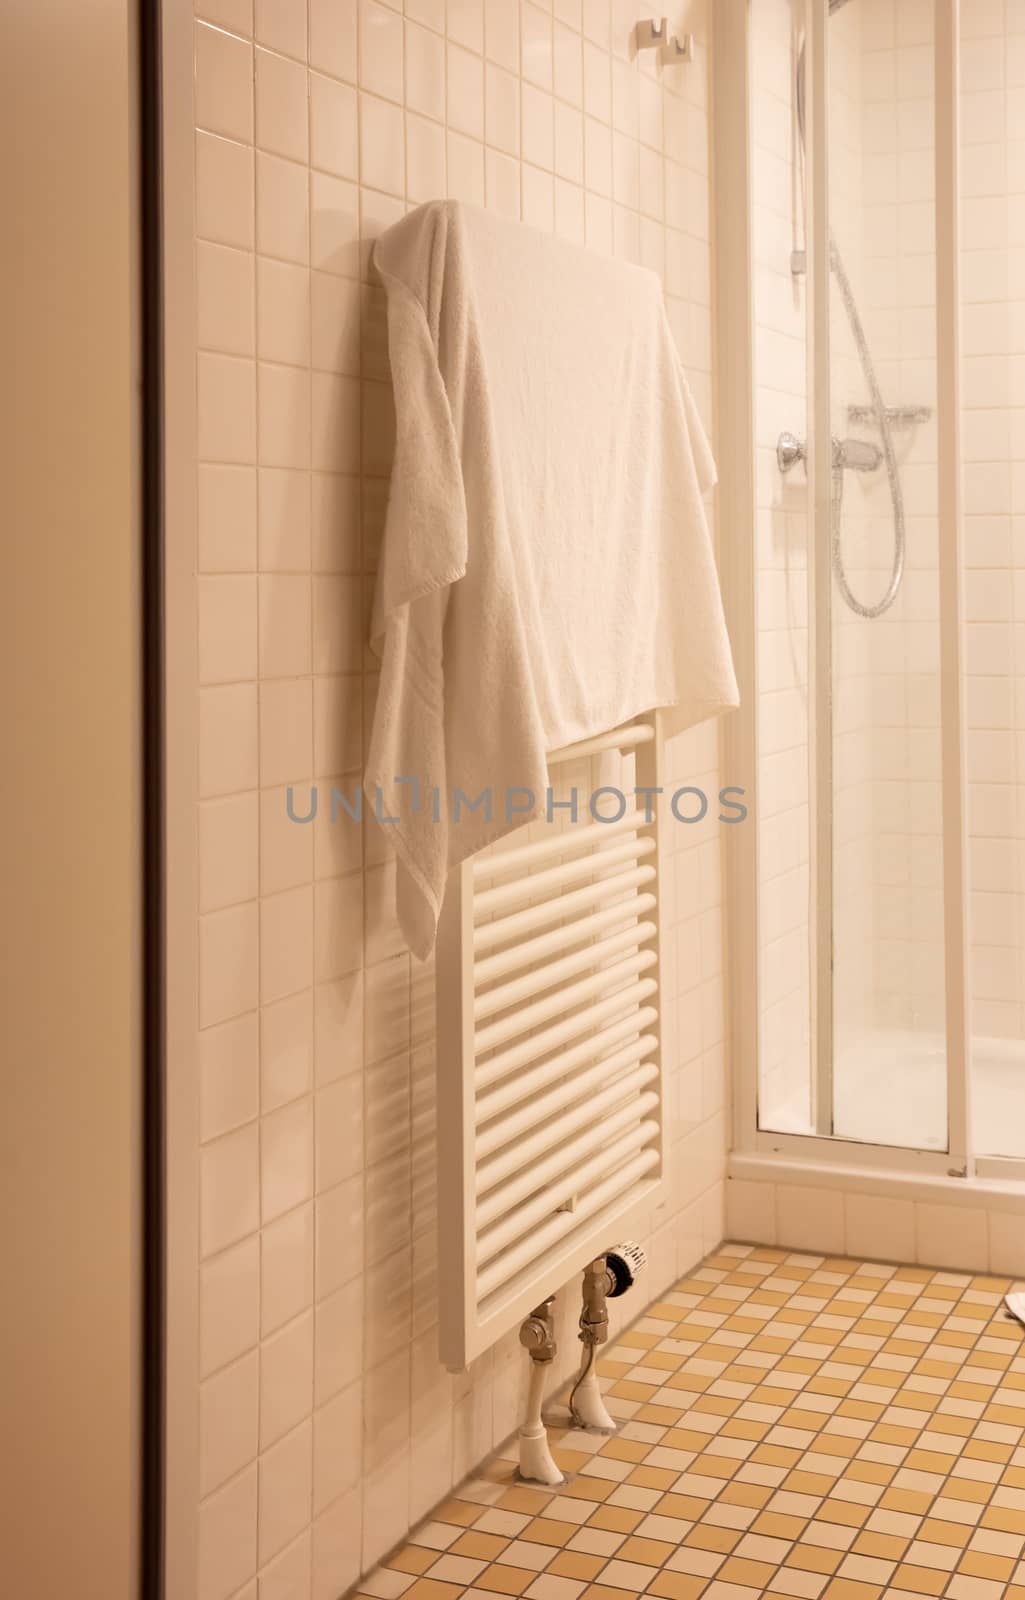 Heated towel rack in an old bathroom, the Netherlands